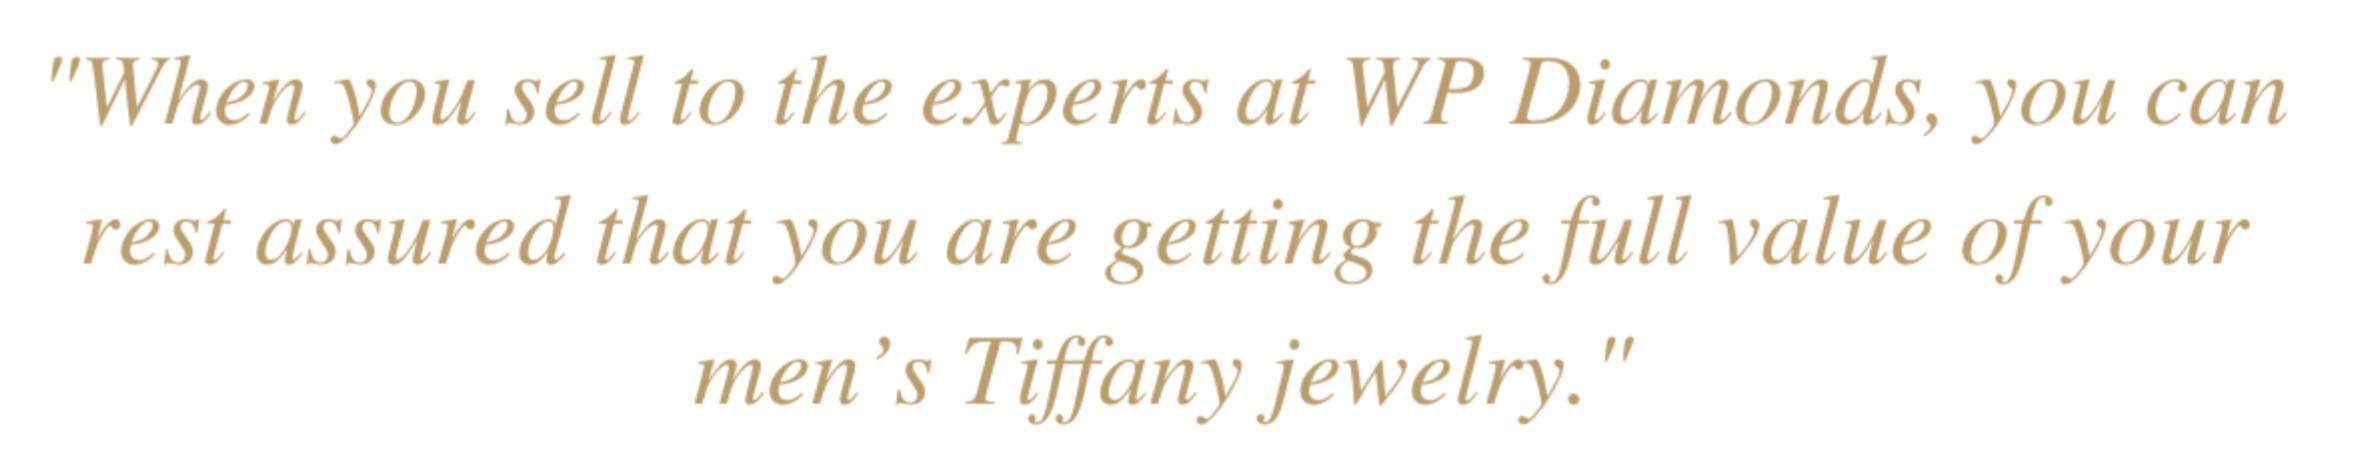 Sell men's Tiffany jewelry